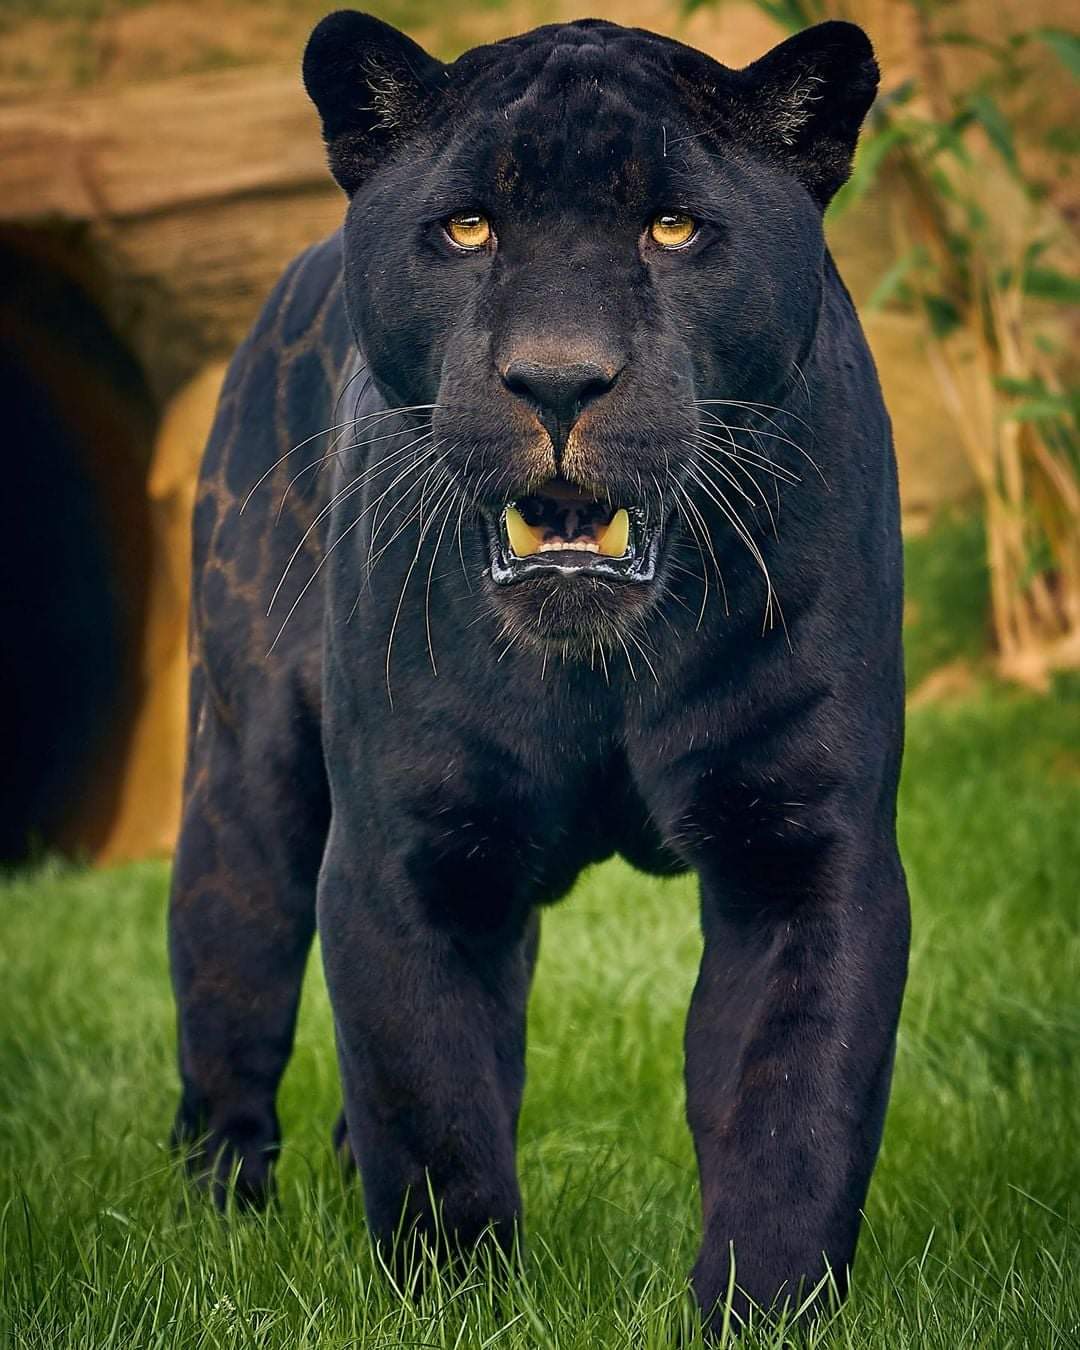 WILDLIFE - The Magnificent Black Jaguar